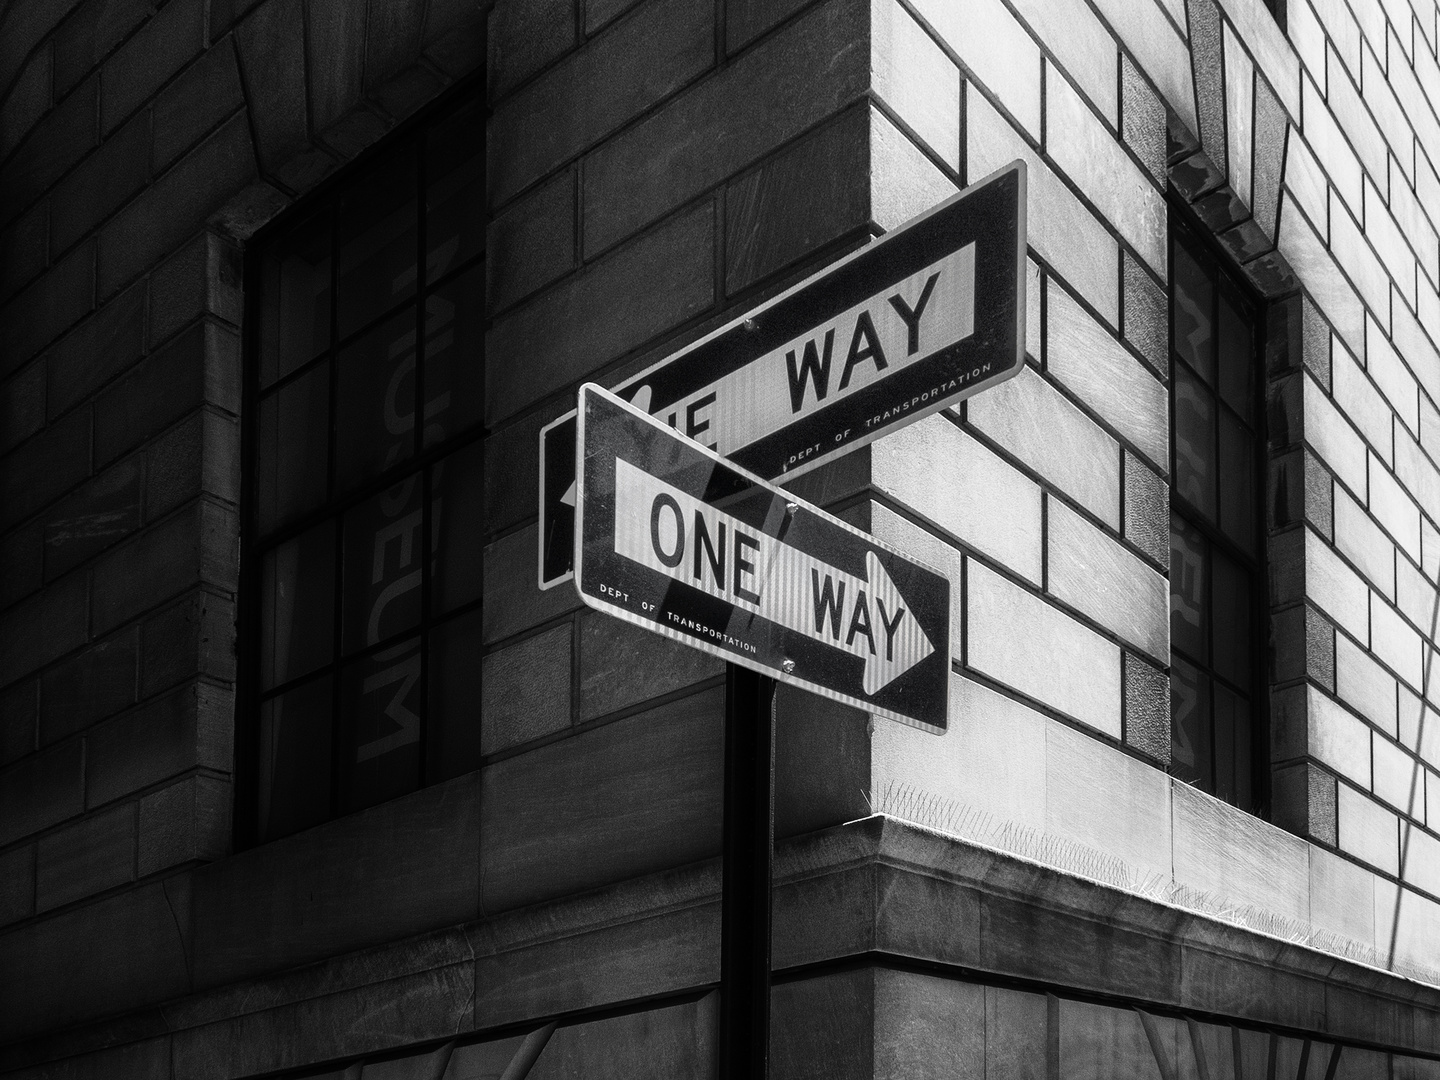 ... one way ...